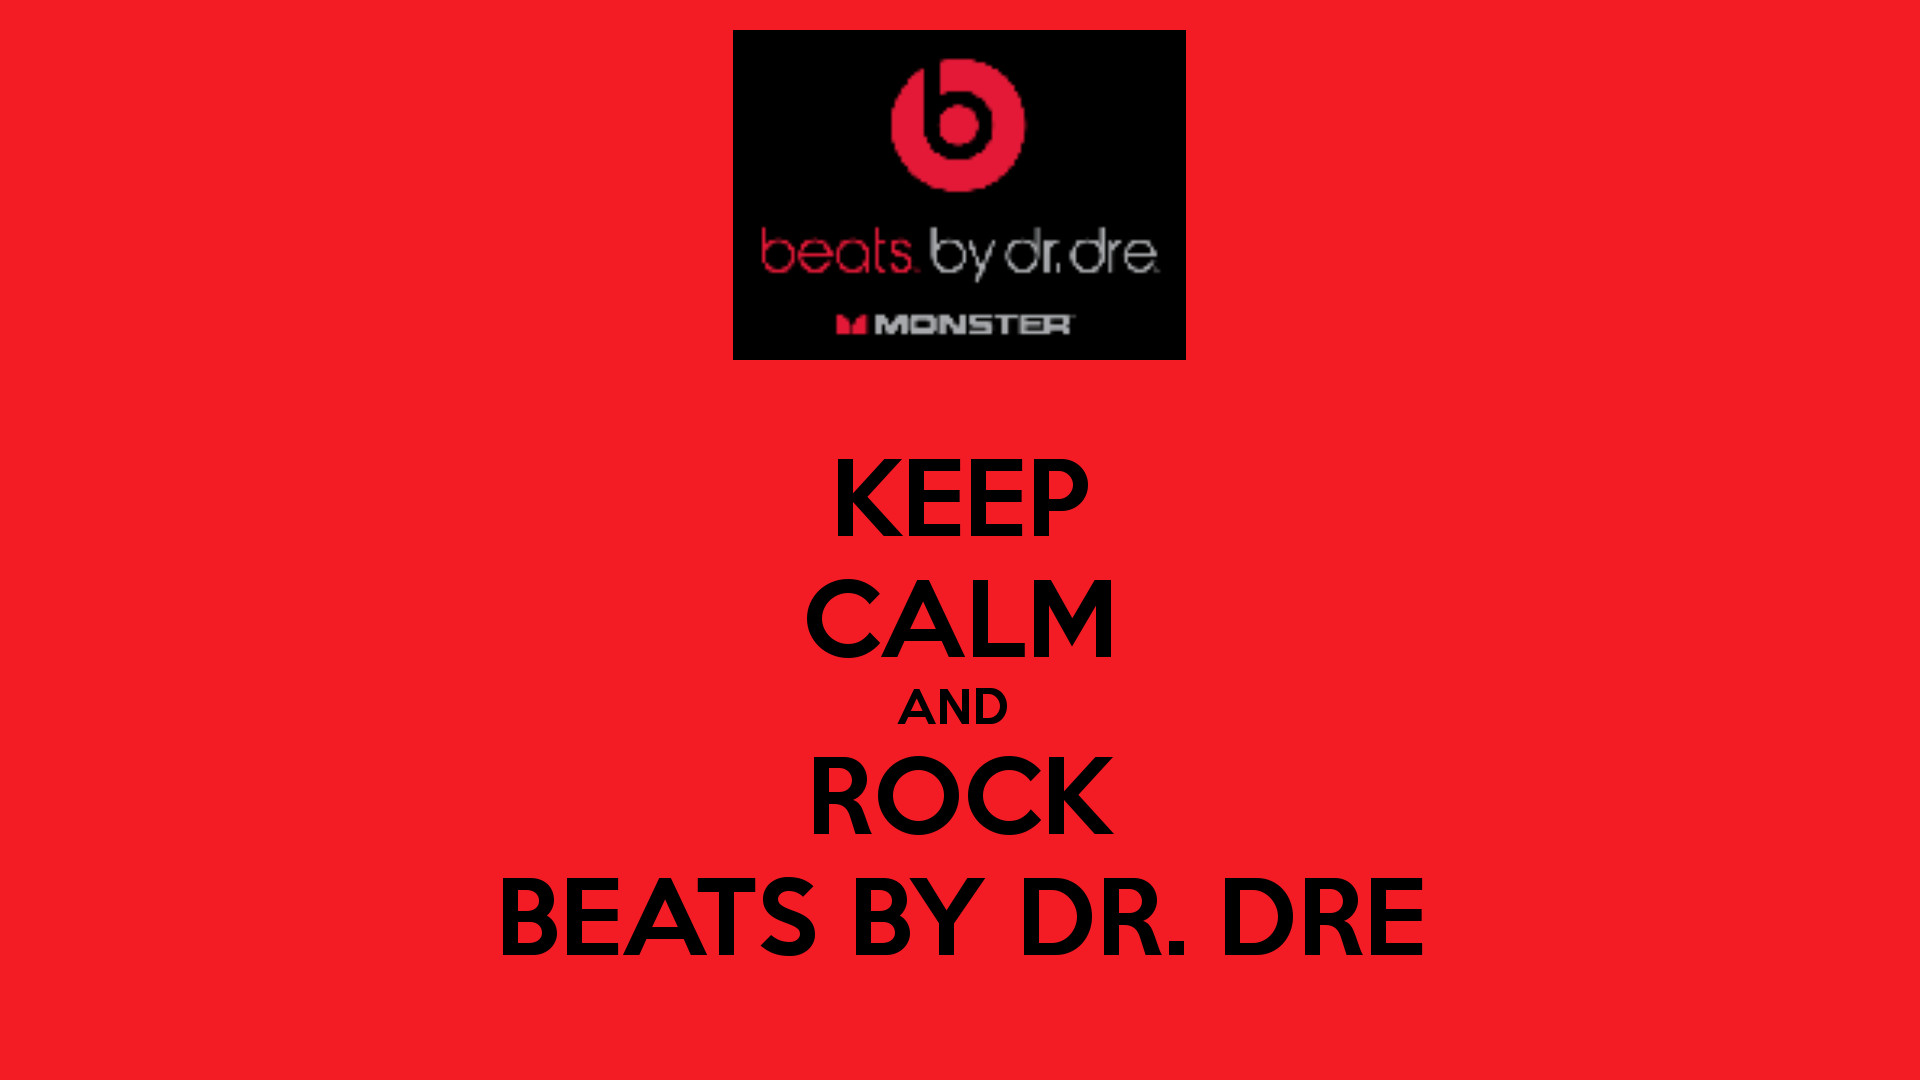 1920x1080 Dr. Dre Beats images Beats Wallpaper HD wallpaper and background photos